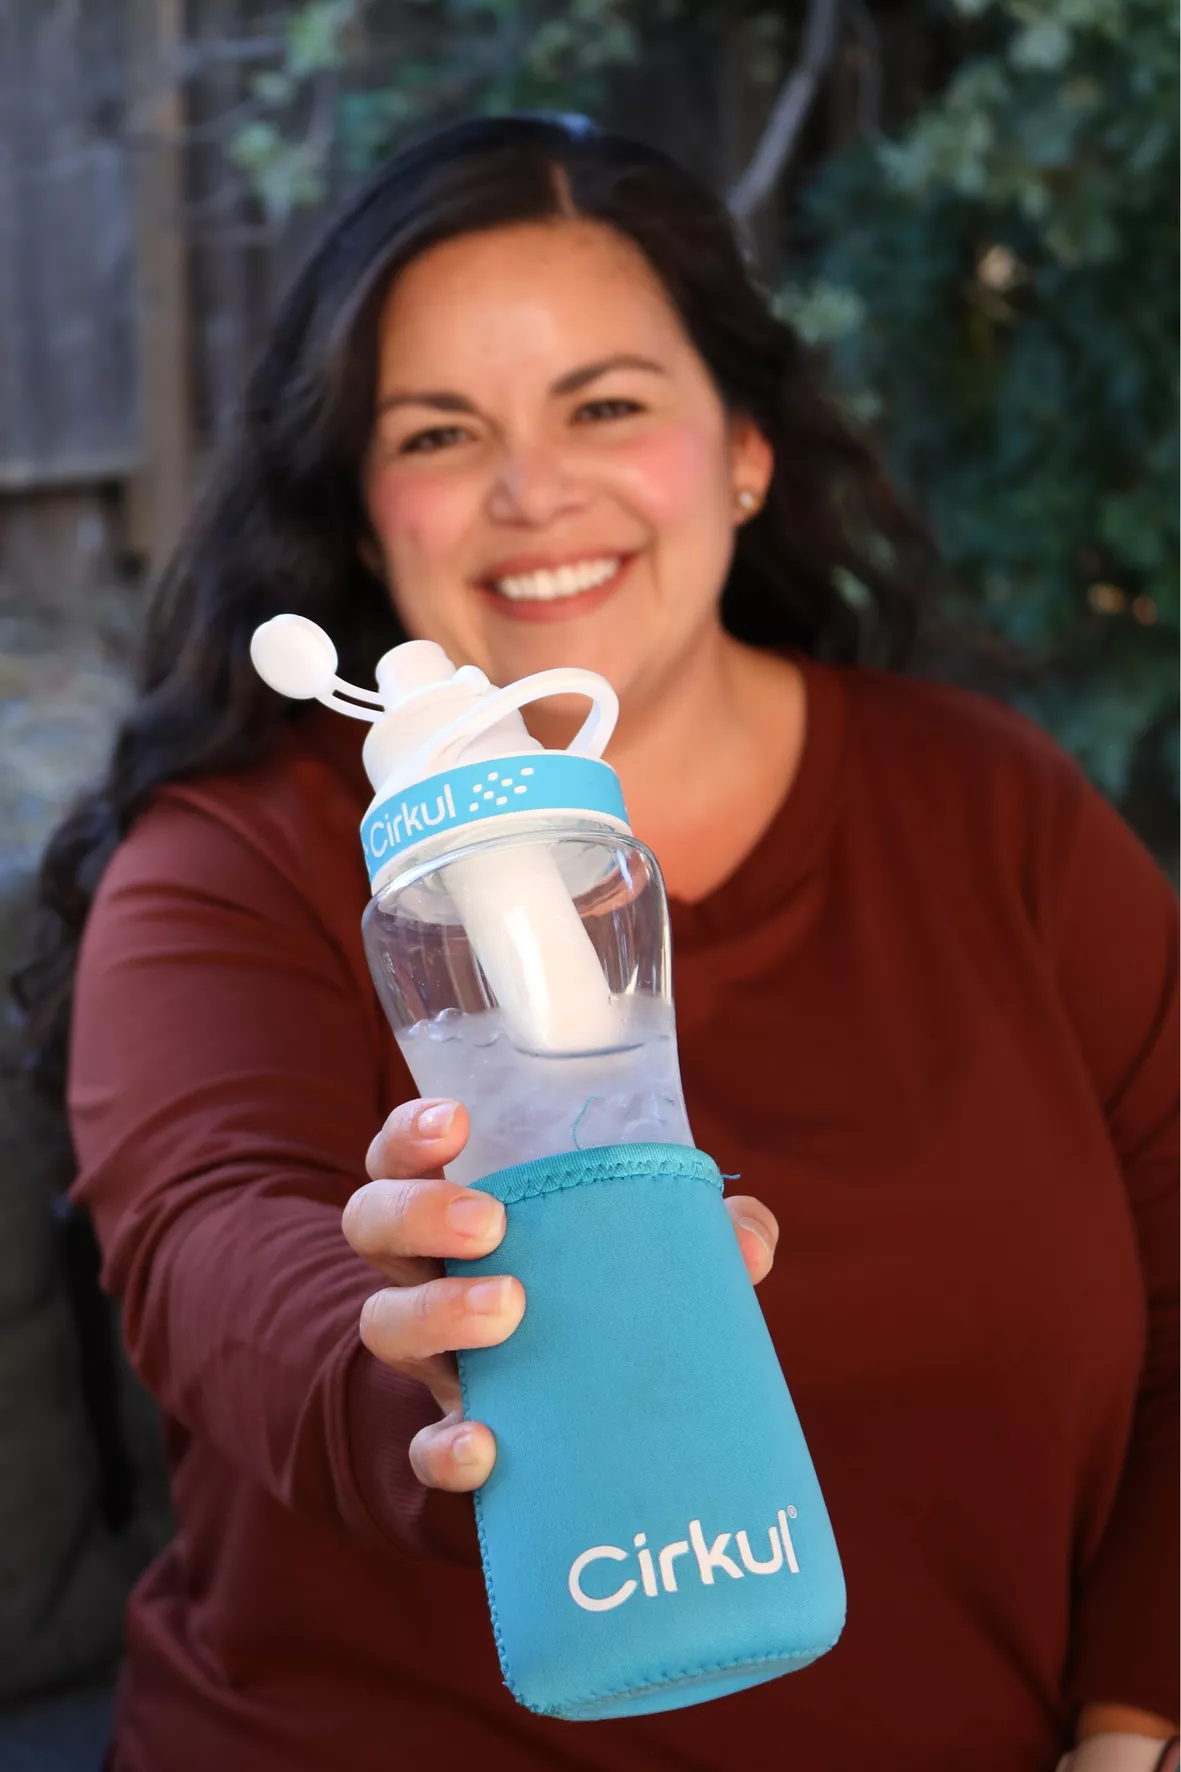 Cirkul Plastic Water Bottle Starter Kit with Blue Lid 22oz & 2 Flavor Cartridges